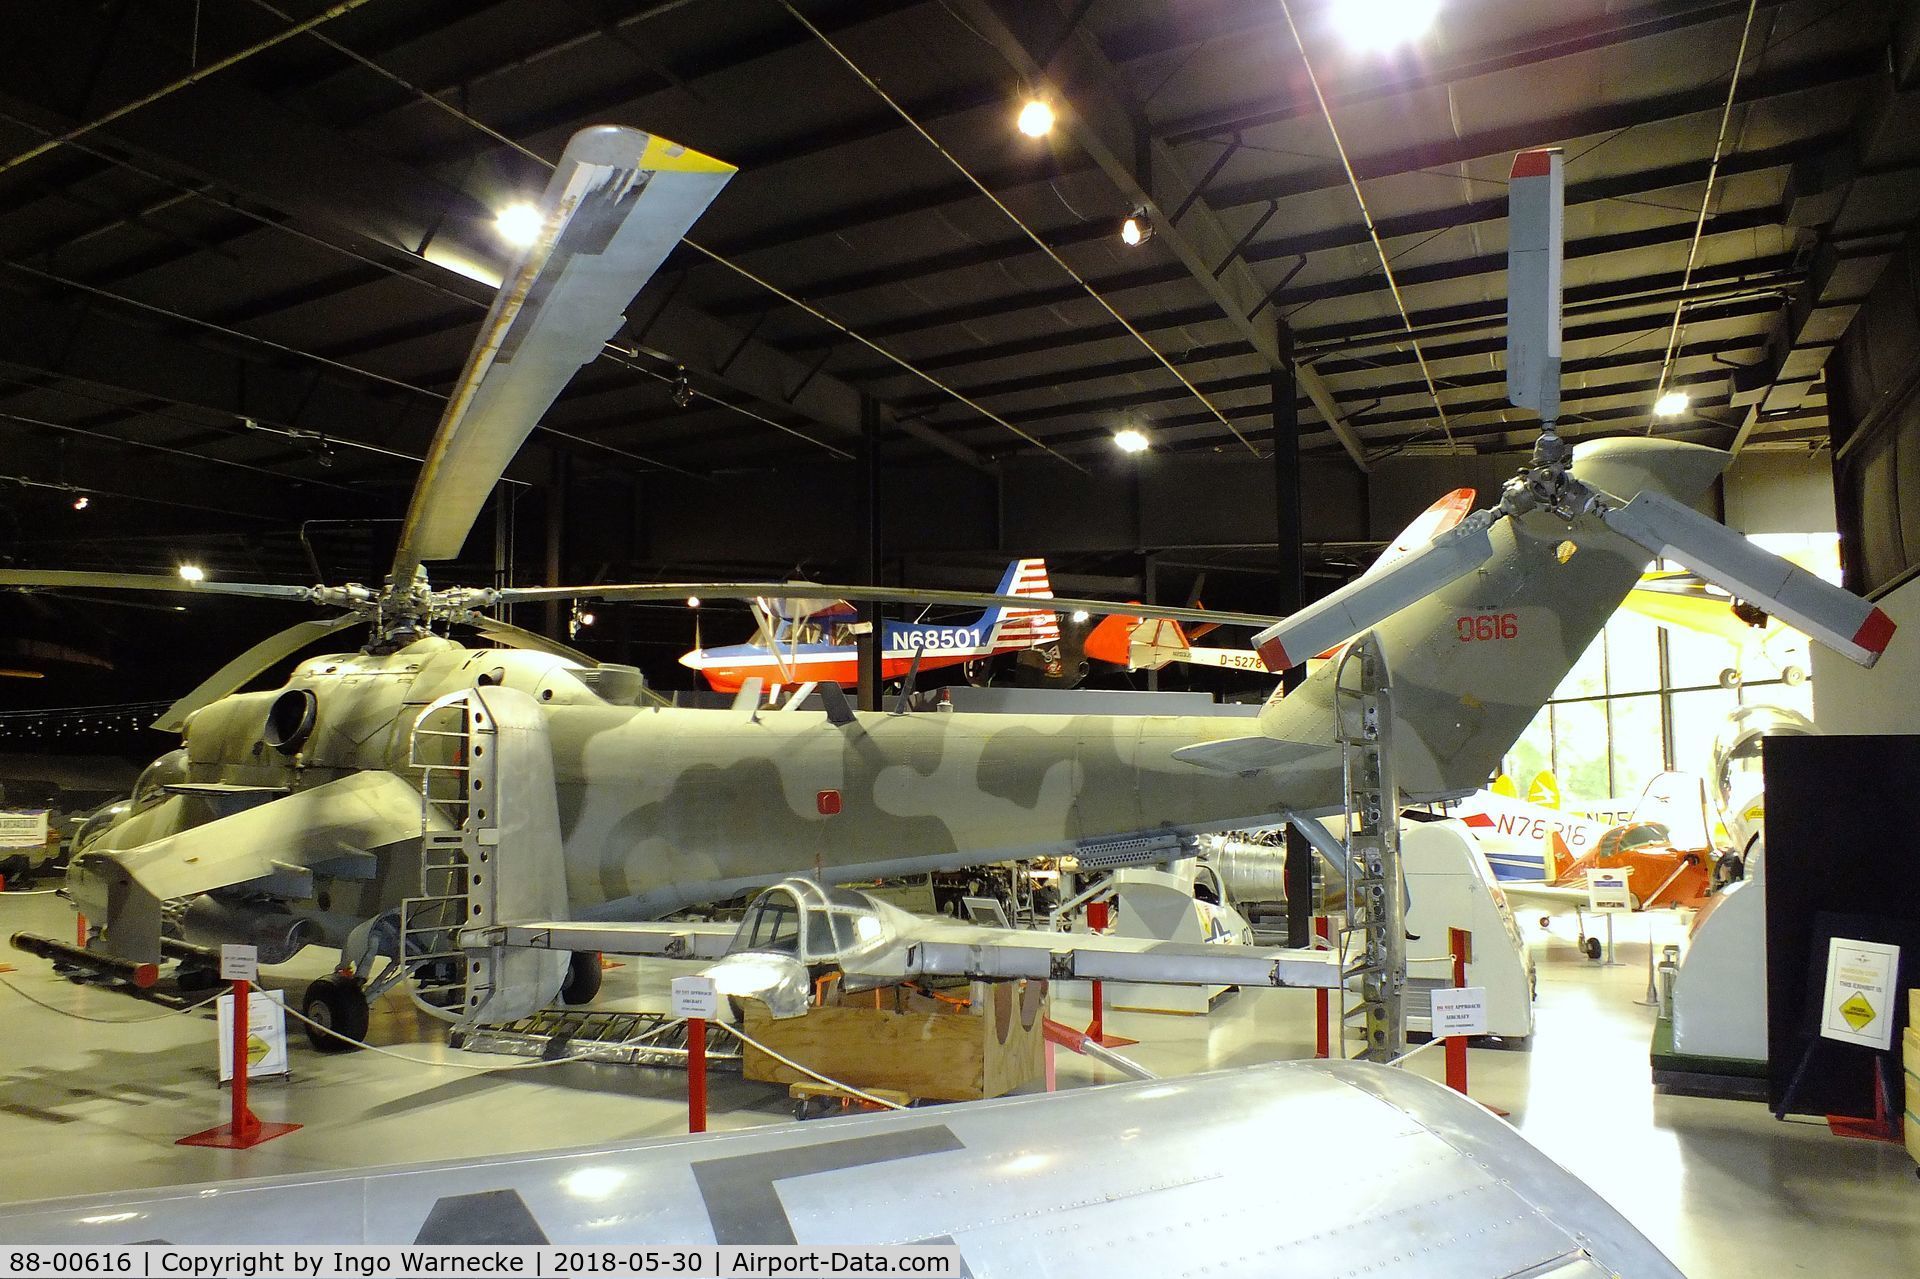 88-00616, Mil Mi-24D C/N 110166, Mil Mi-24D HIND-D (ex US-Army, ex Bundeswehr 96 30, ex NVA 494) at the Southern Museum of Flight, Birmingham AL